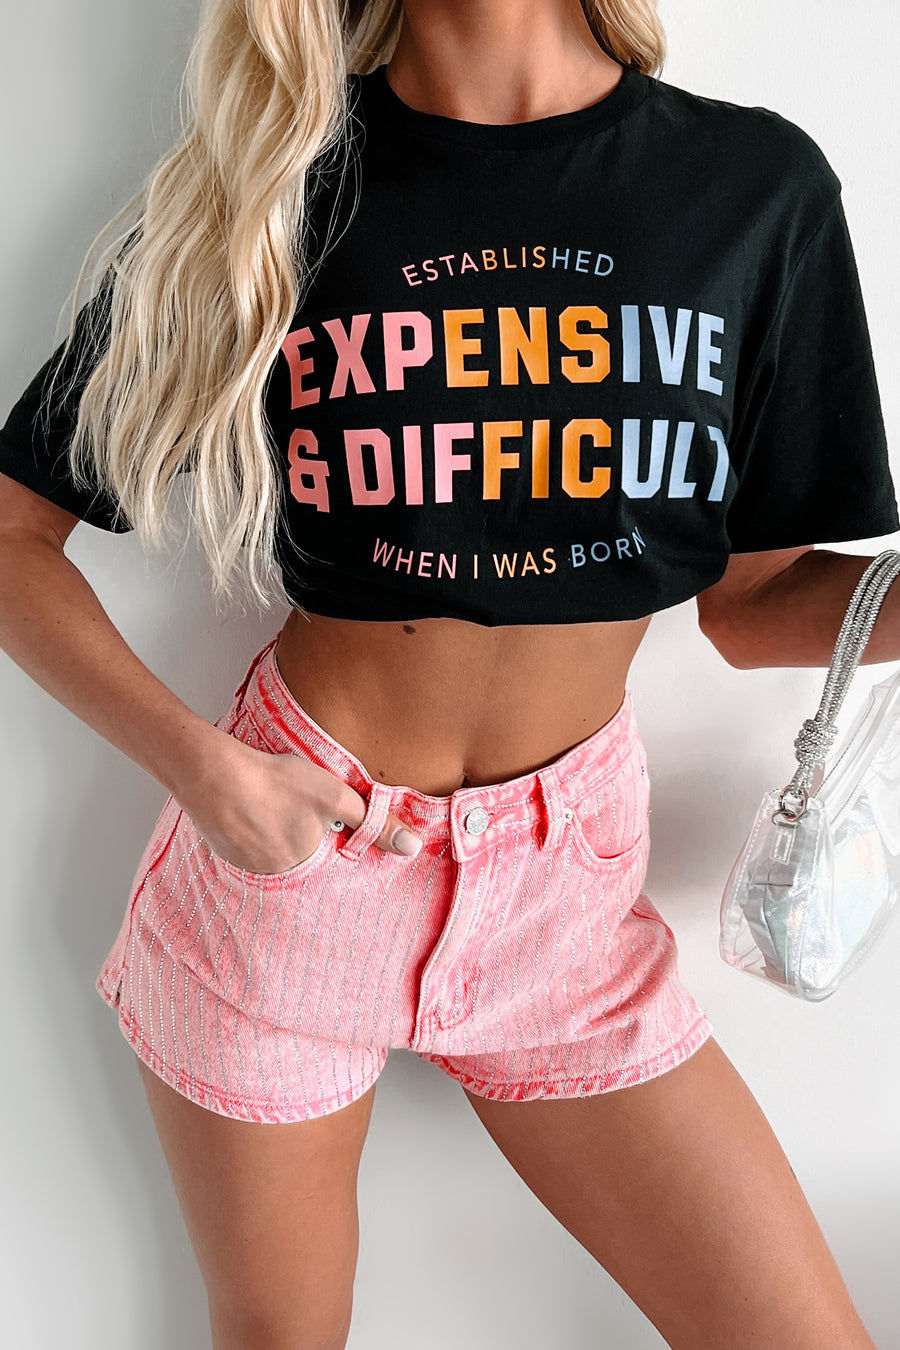 "Expensive & Difficult" Graphic Multiple Shirt Options (Black) - Print On Demand - NanaMacs